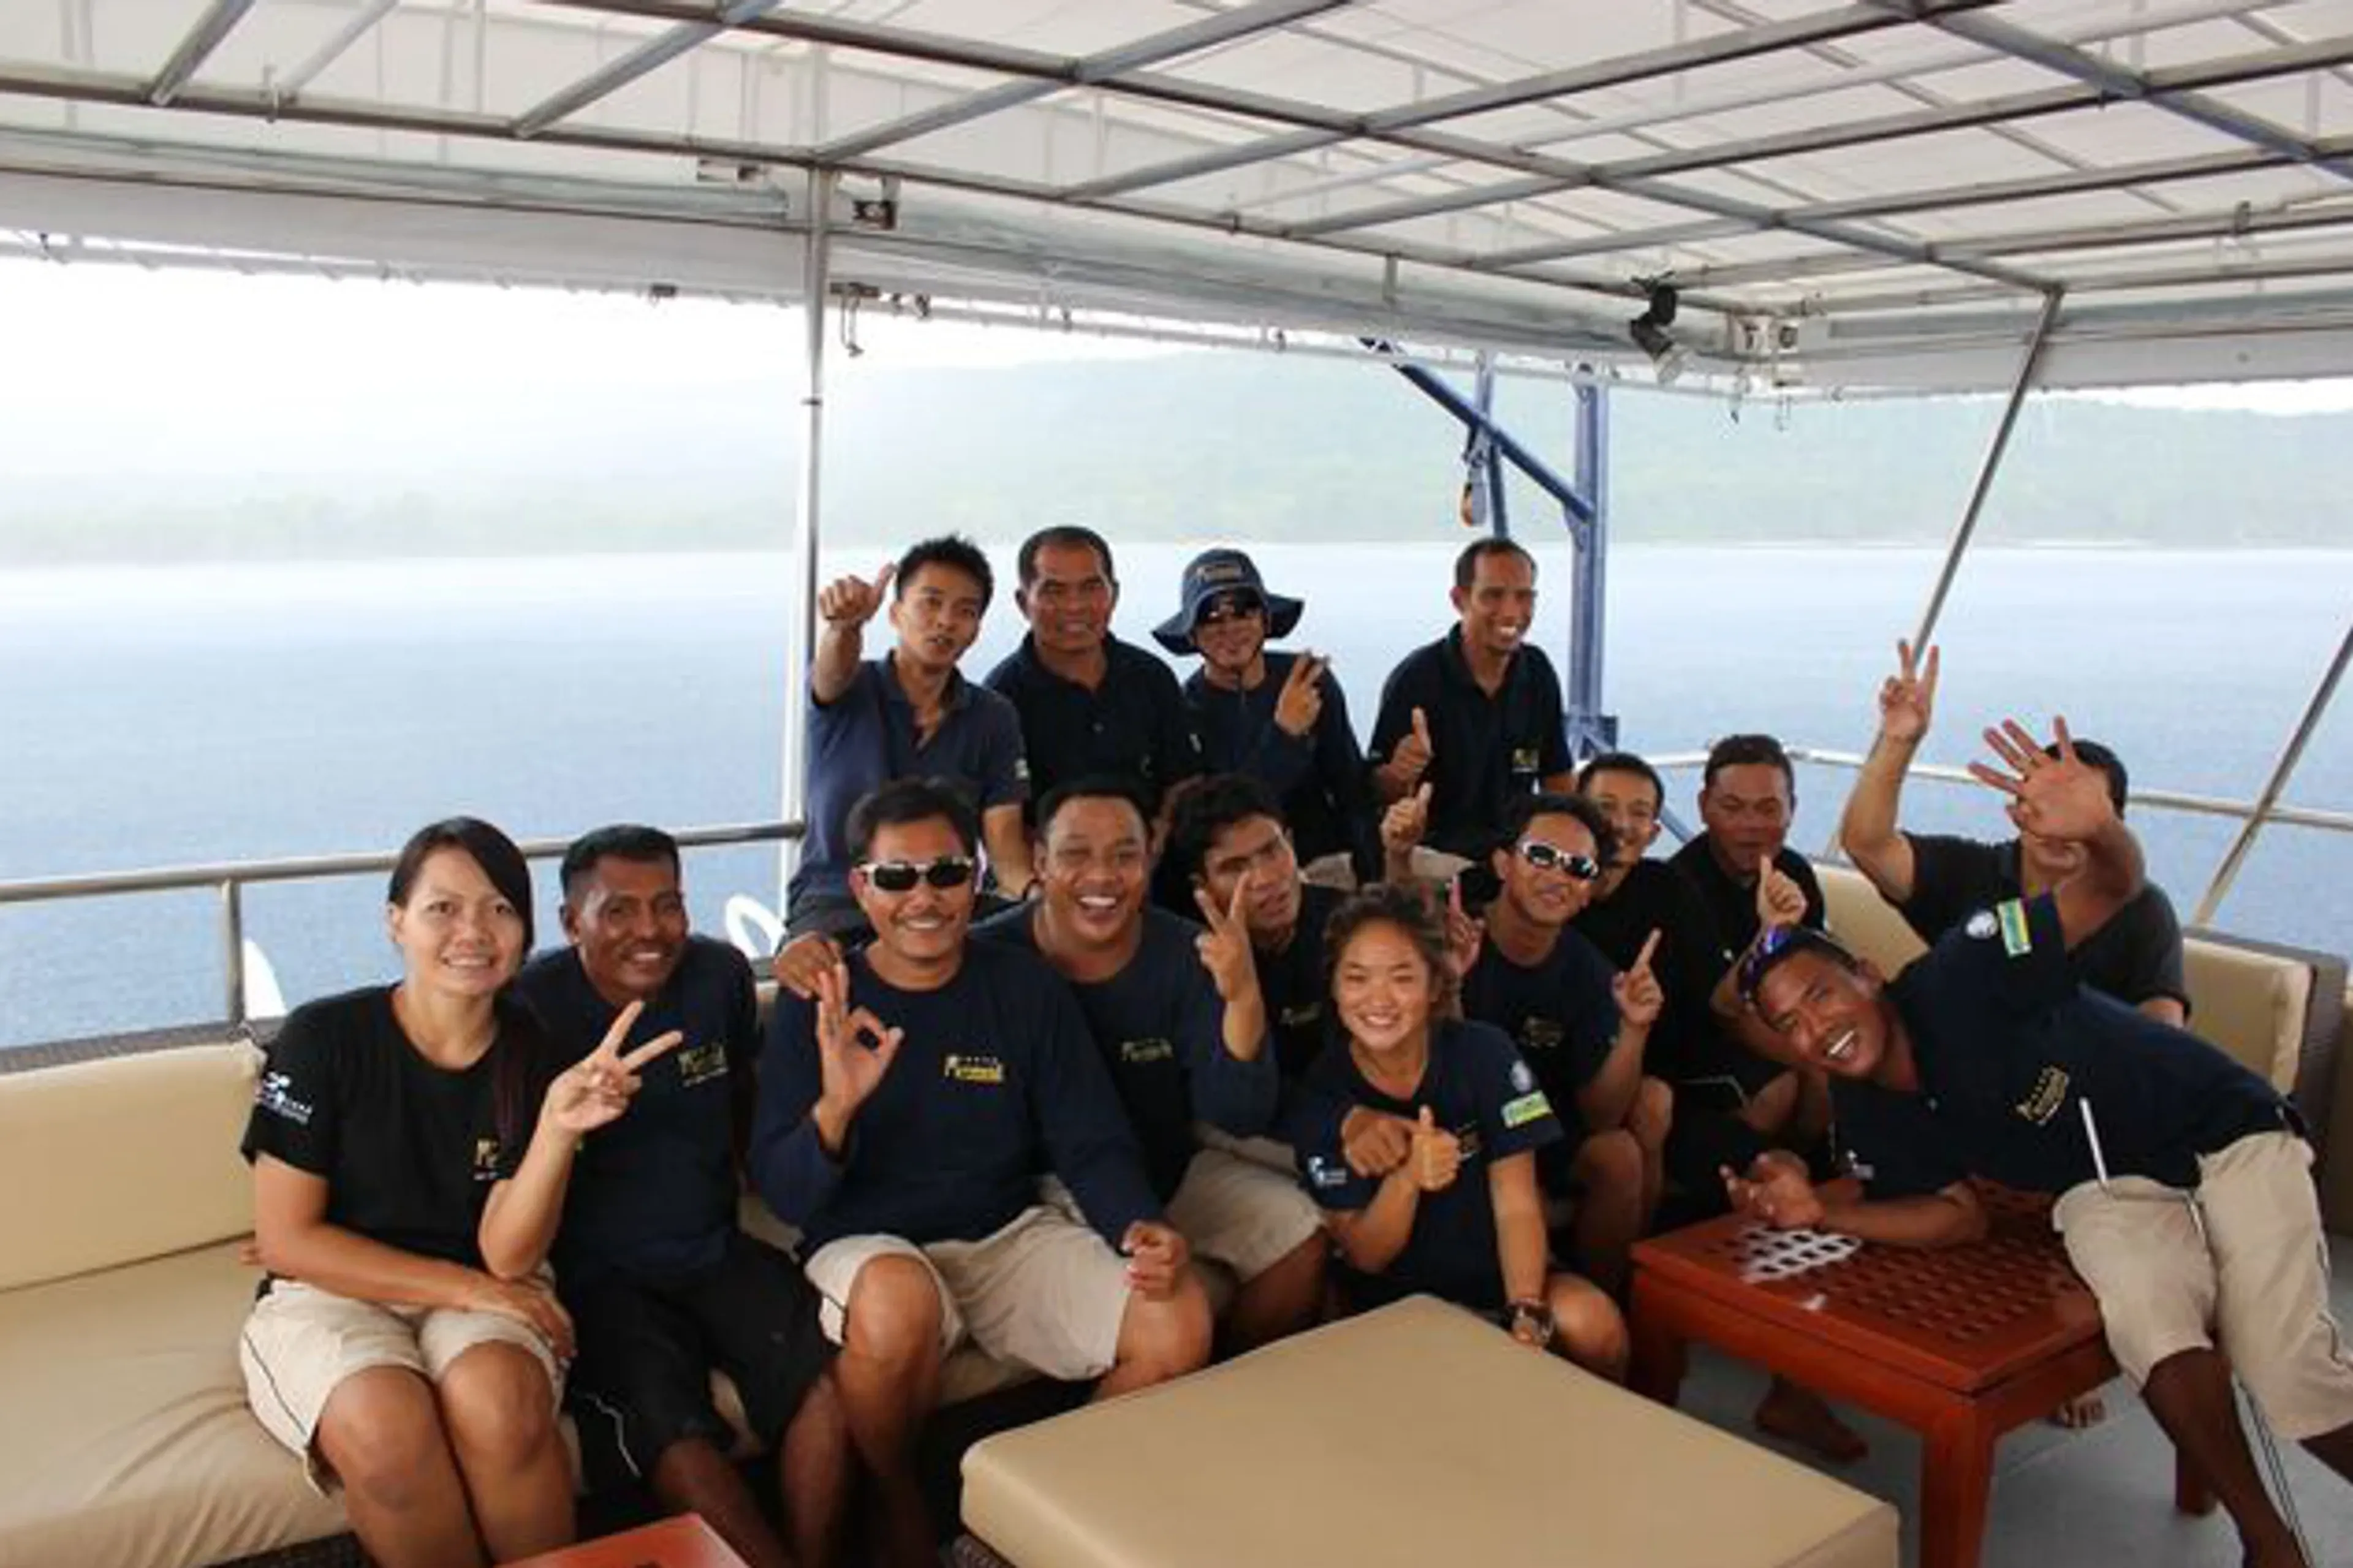 01_Mermaid_Bali_Komodo_Bali_Mermaid II - boat crew 1 Dec 2013.webp